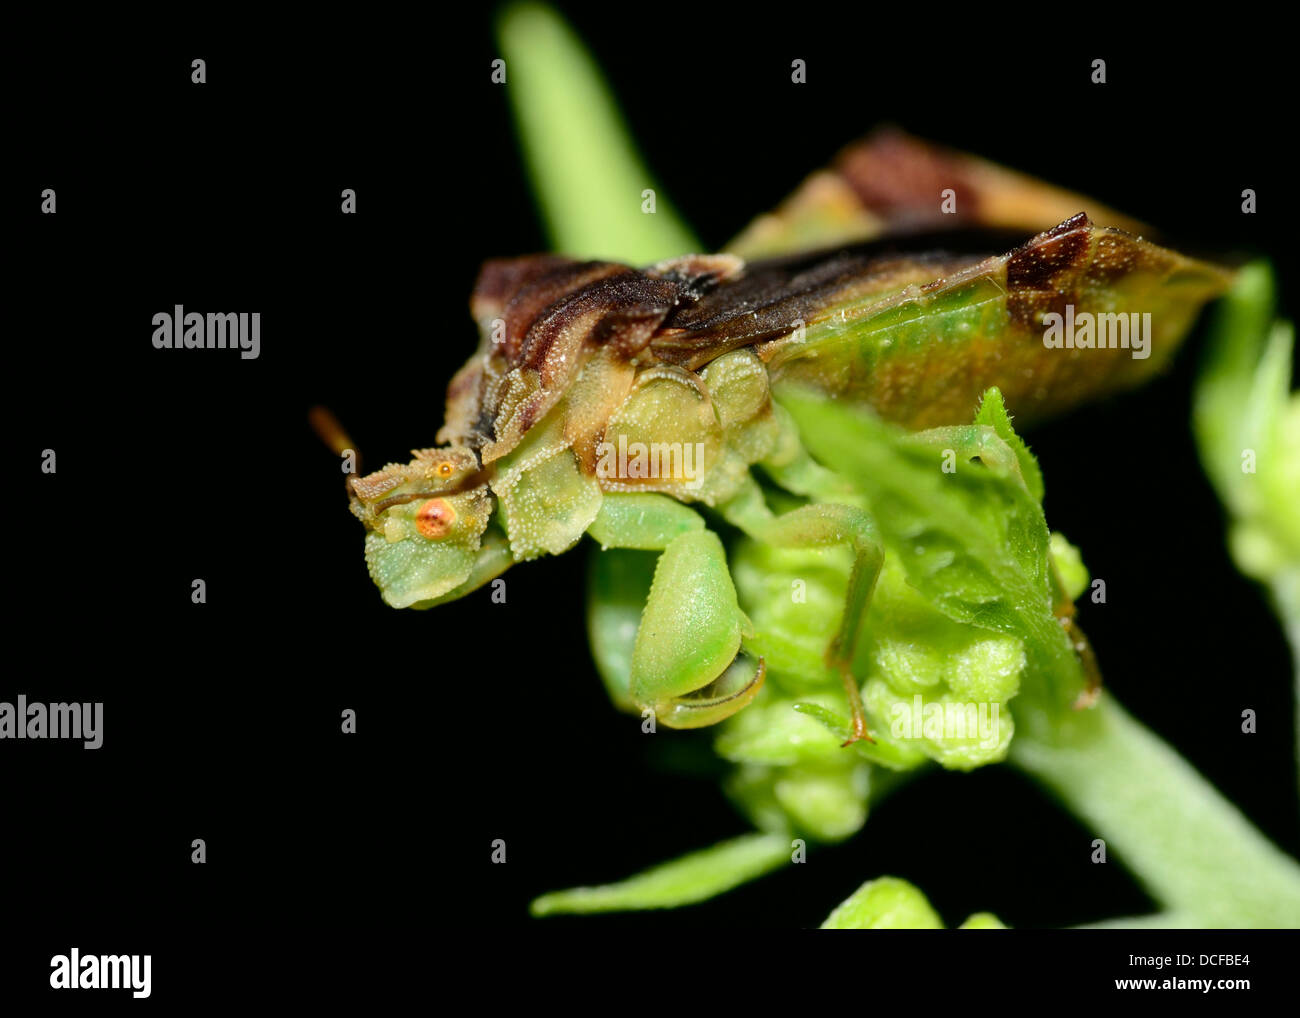 An Ambush Bug perched on a green plant. Stock Photo